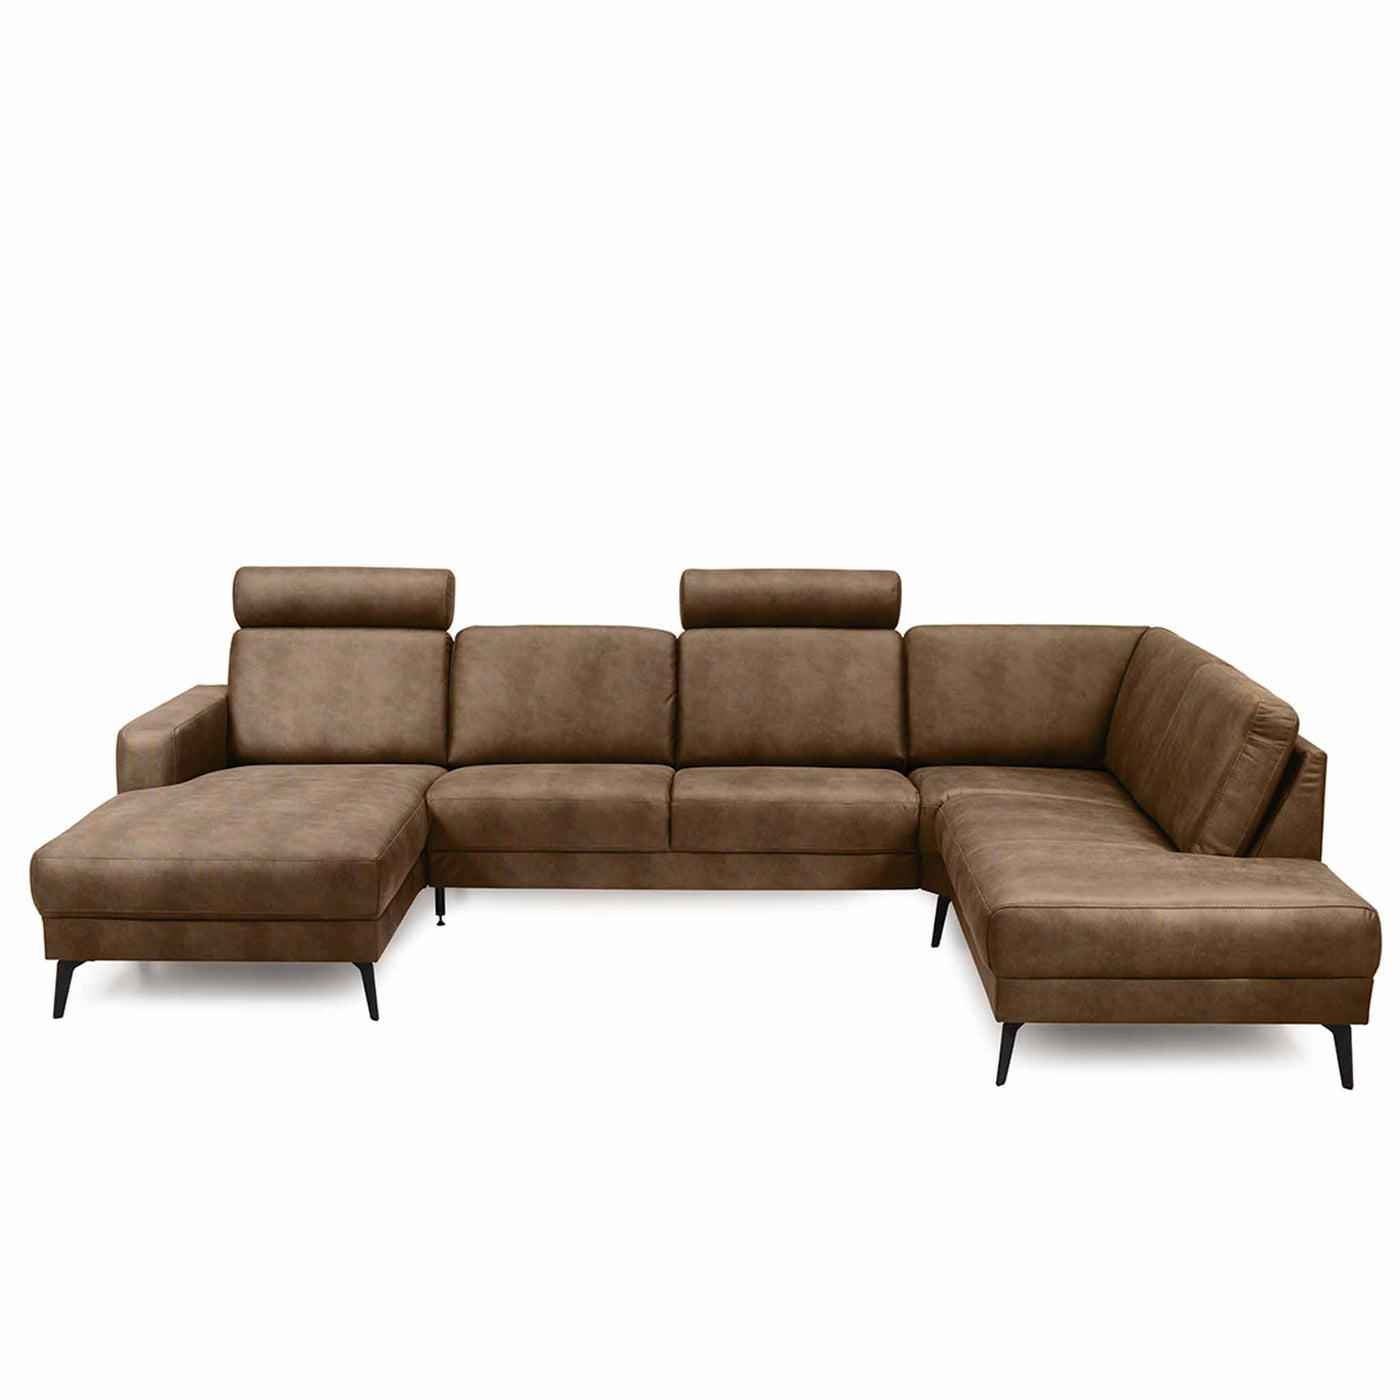 City U-sofa fra Hjort Knudsen med Kentucky stof i farve 2593 Cognac. Her venstrevendt.